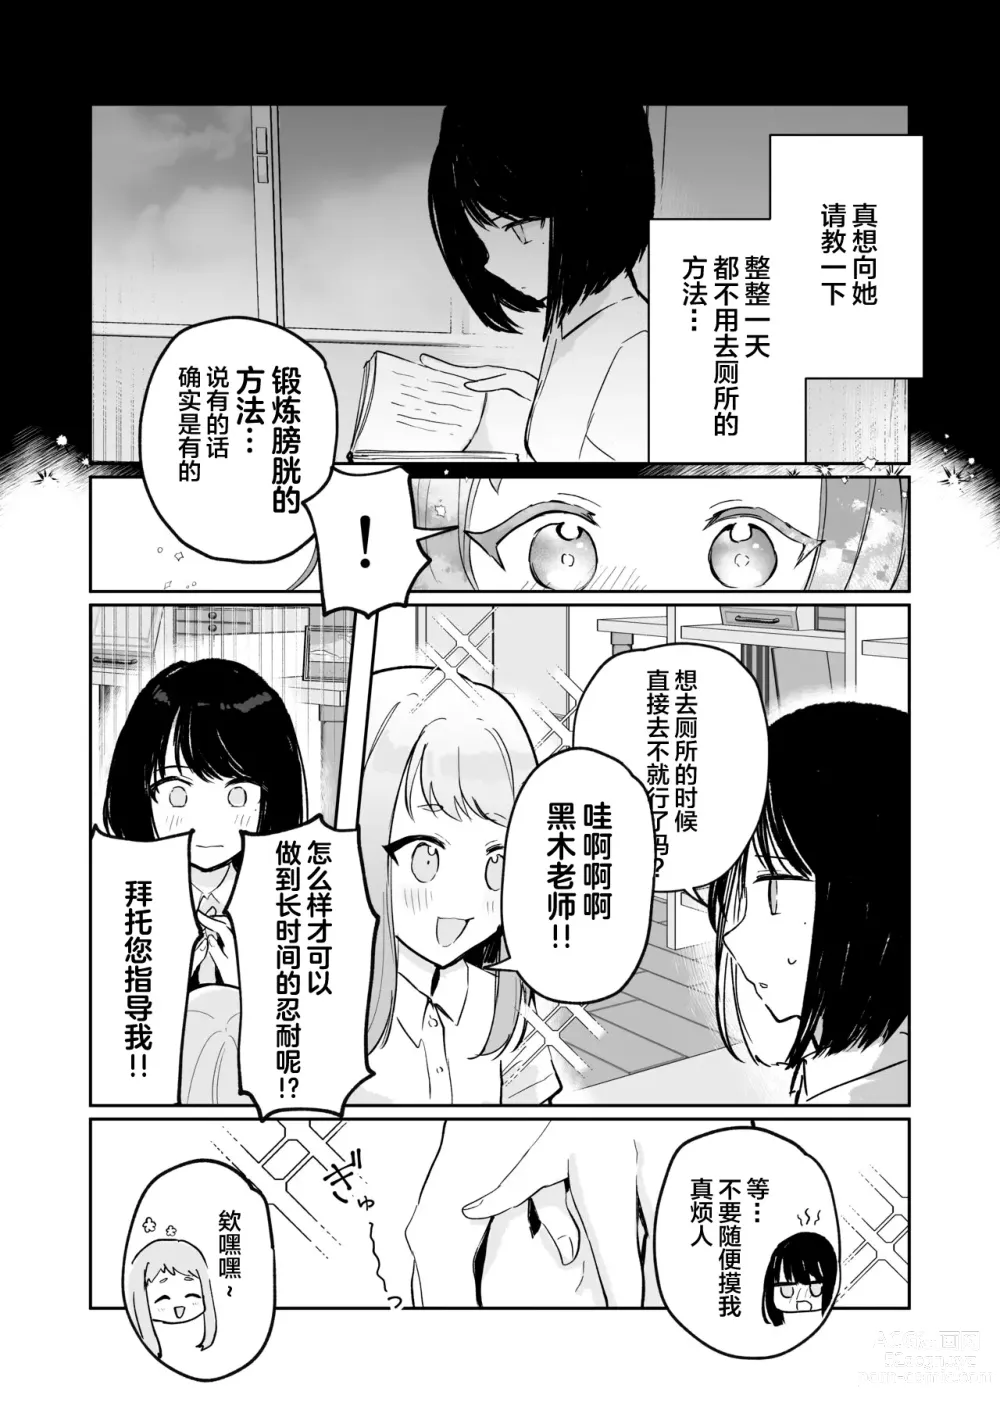 Page 23 of doujinshi 还可以忍耐的吧?